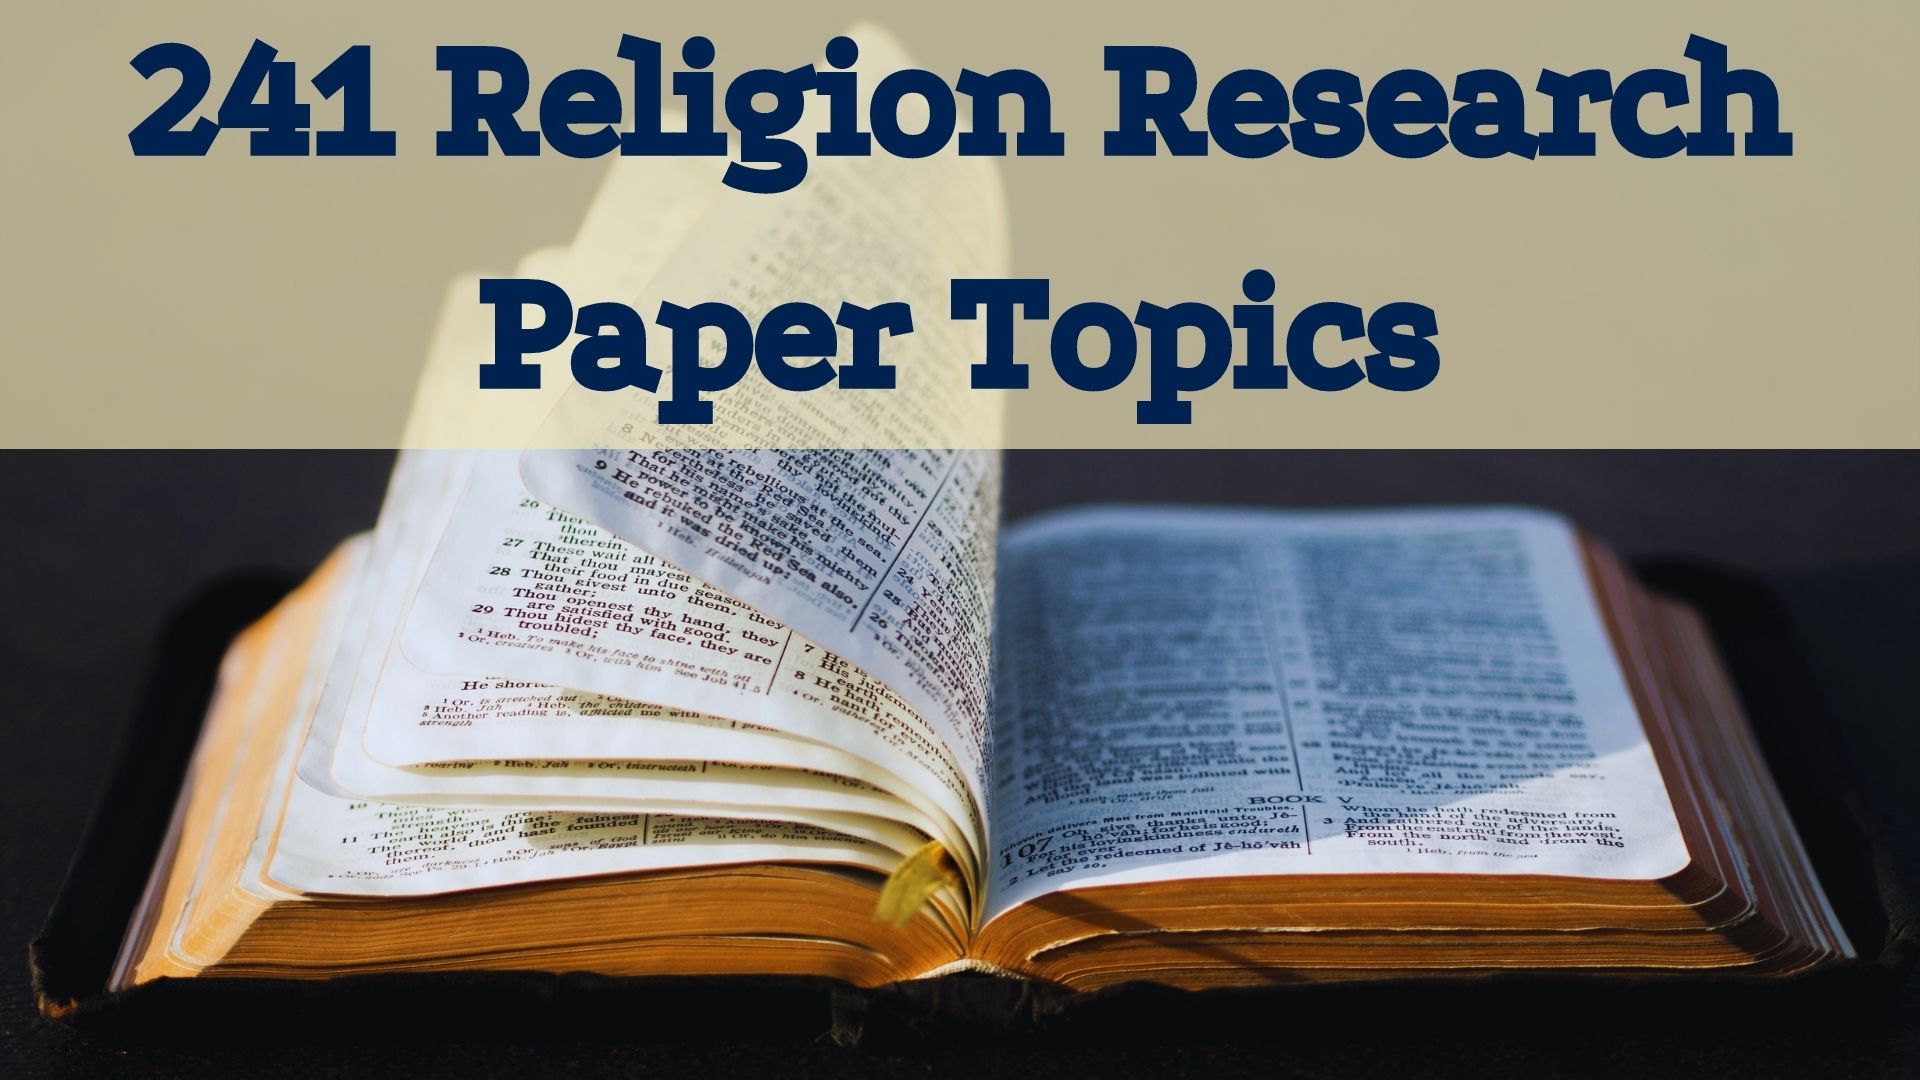 241 Religion Research Paper Topics